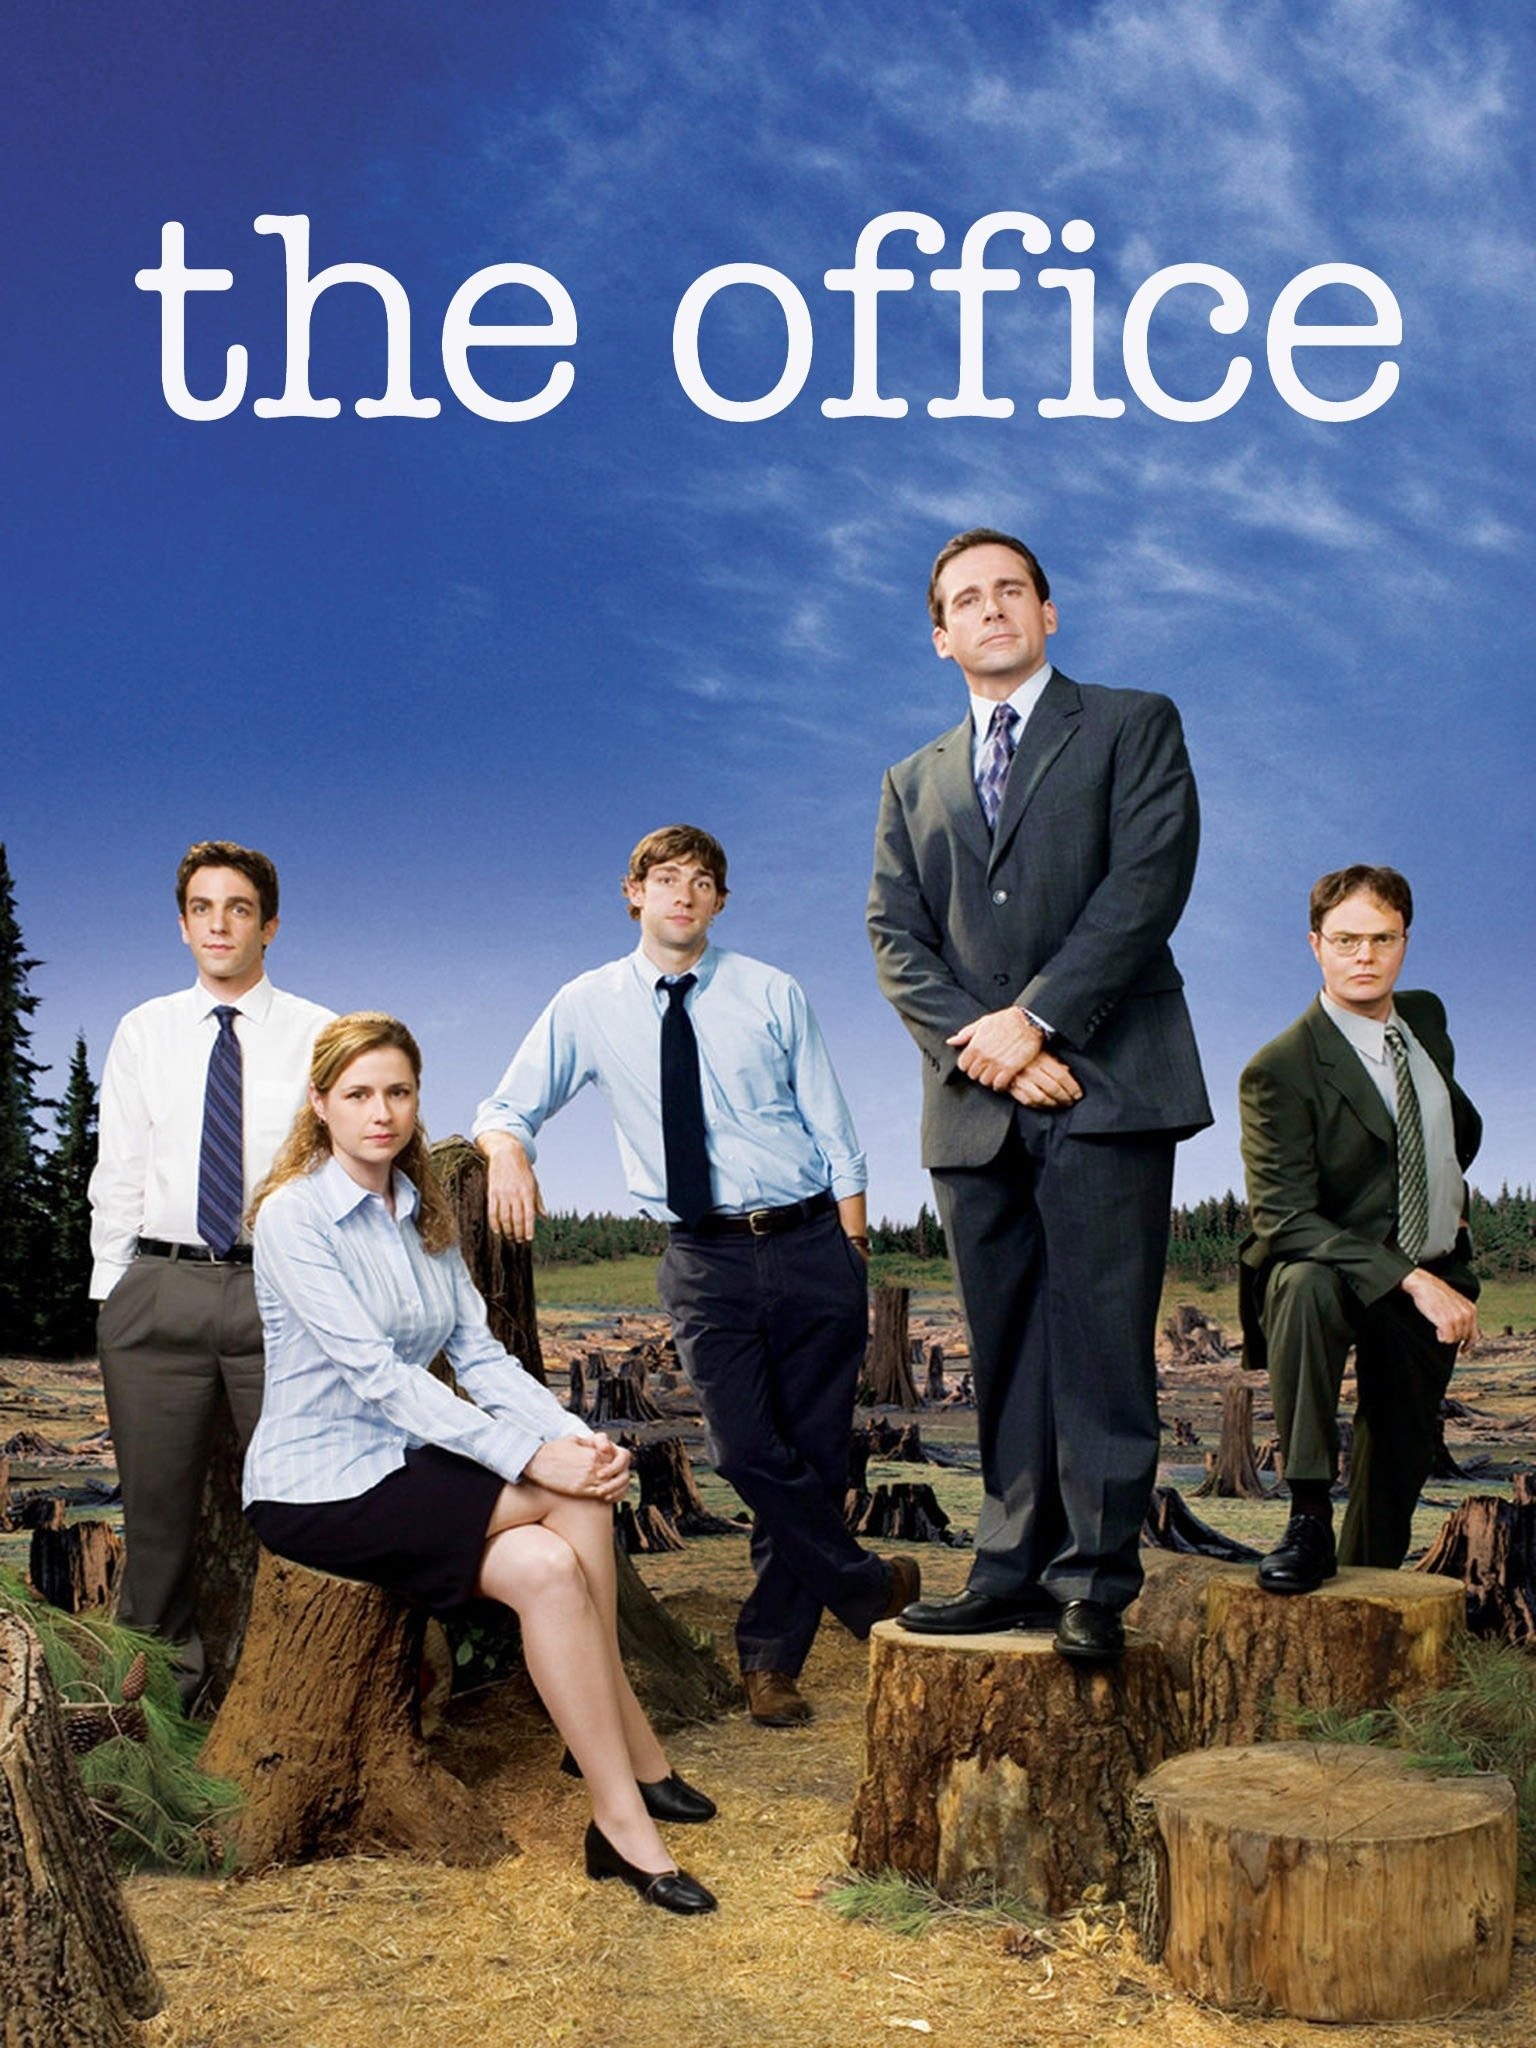 The Office (American season 4) - Wikipedia